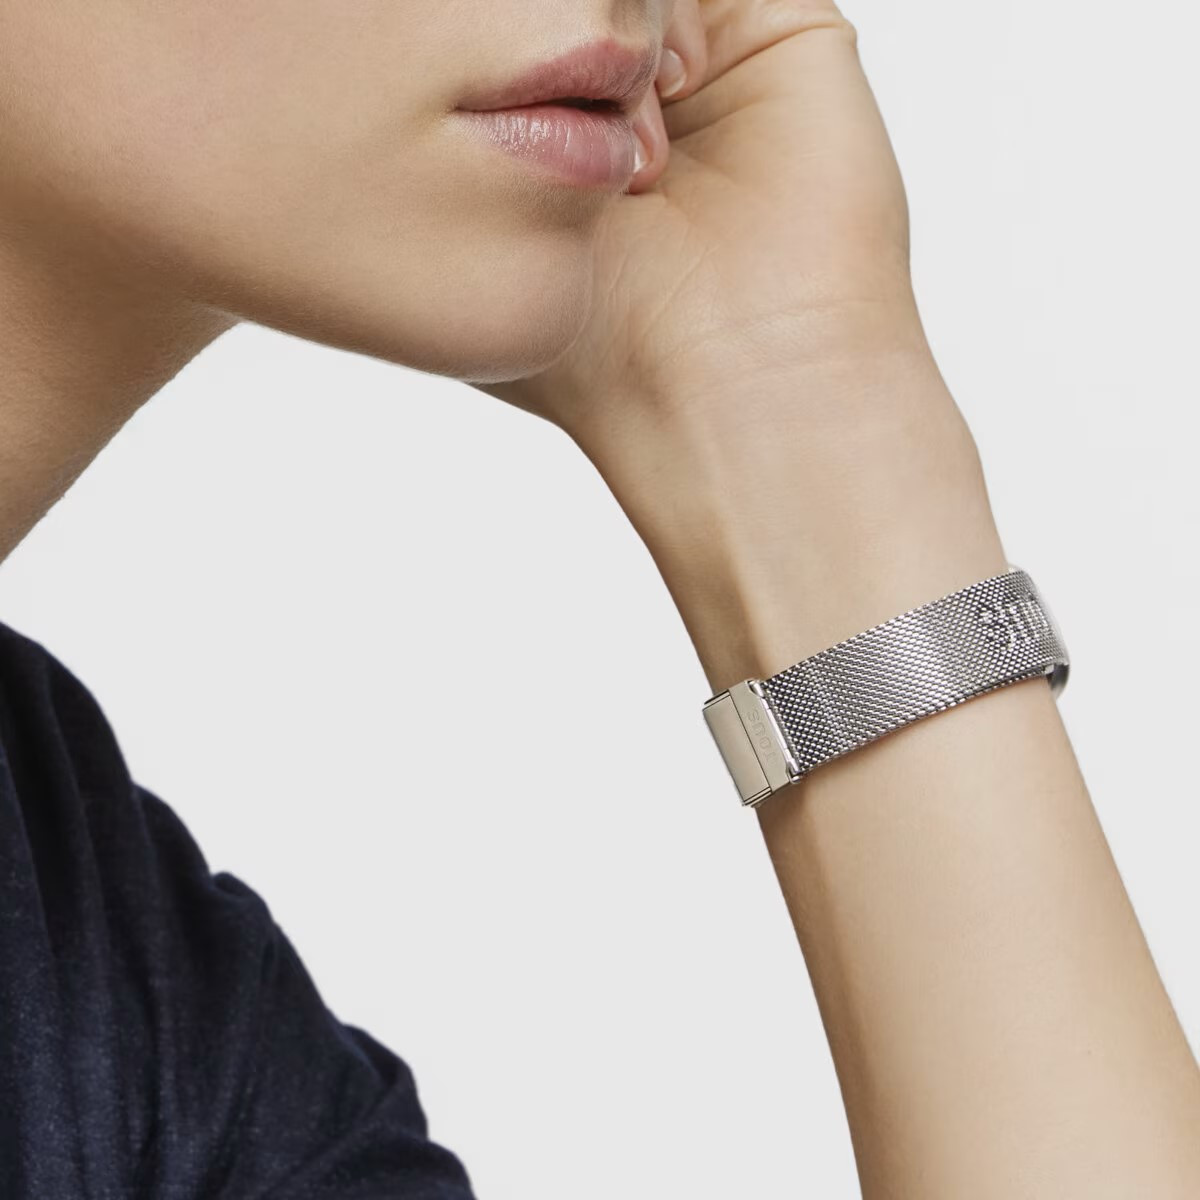 Reloj Tous T-Band smartwatch con brazalete de acero y caja de aluminio